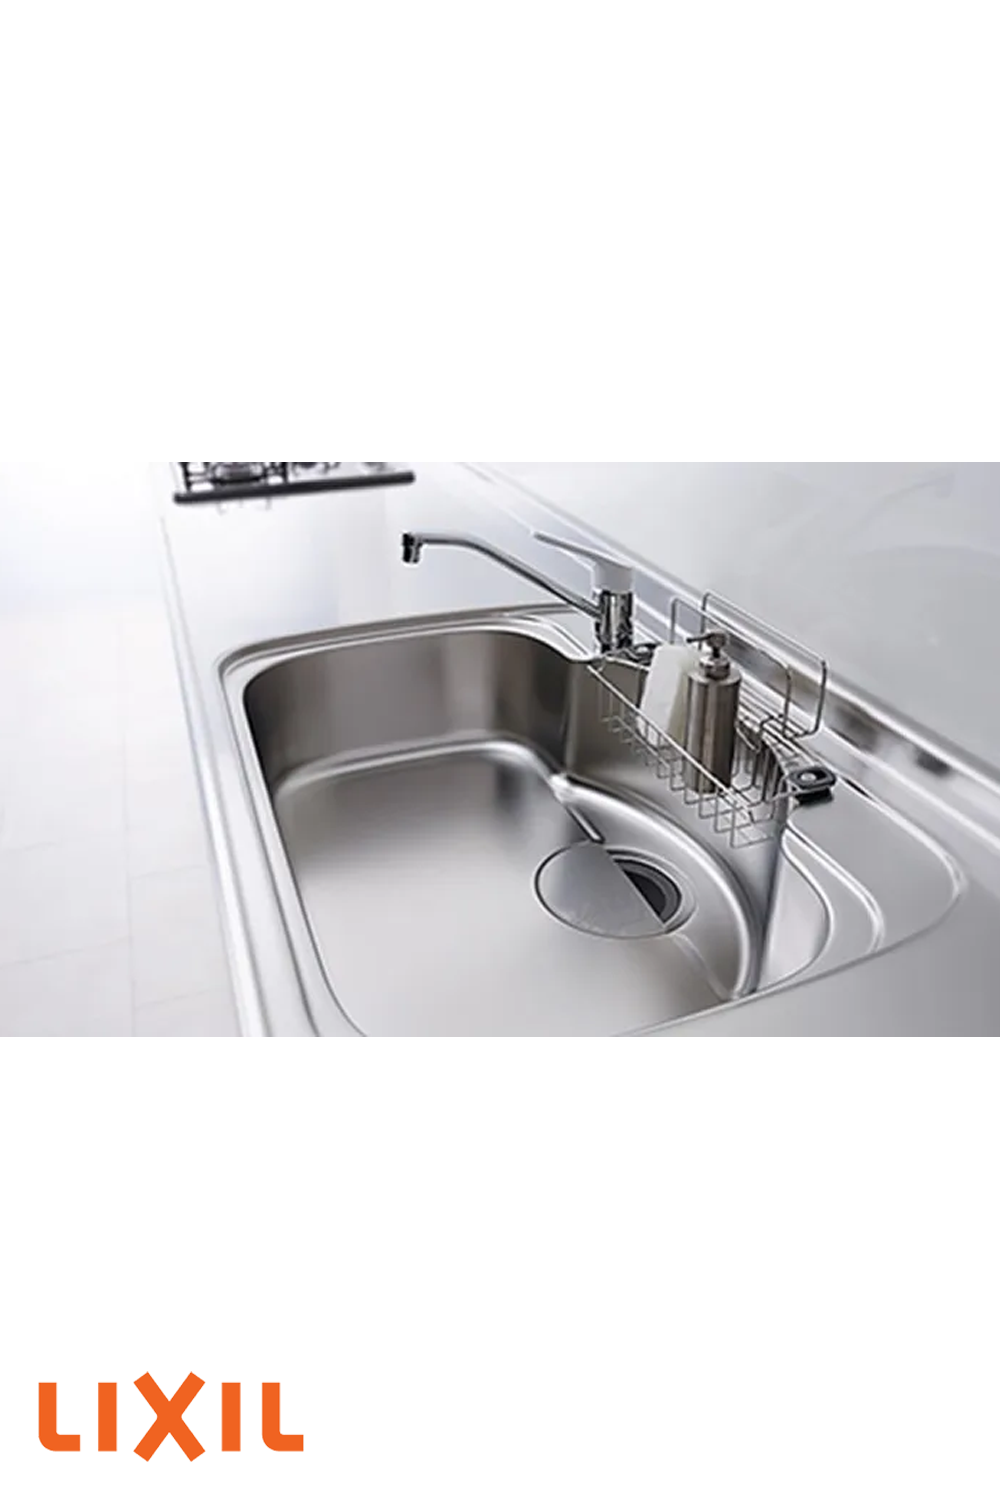 LIXIL A9N 790mm Japanese Single-Level Silence Sink 日本LIXIL 單層靜音不銹鋼廚房星盆  | Made in Japan |